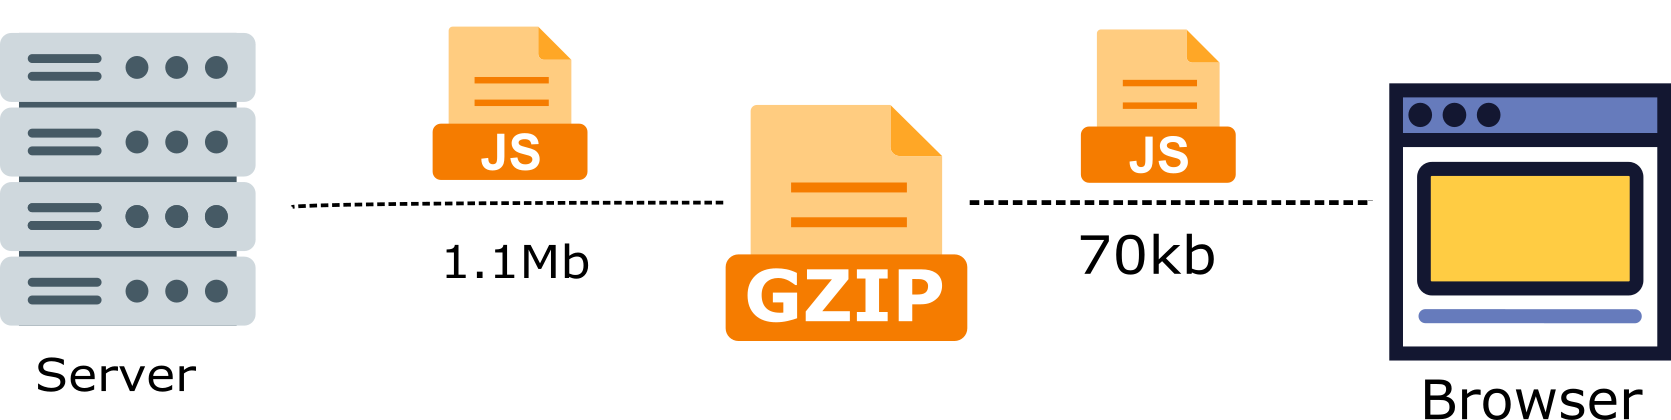 SpeedyCache GZIP JS File